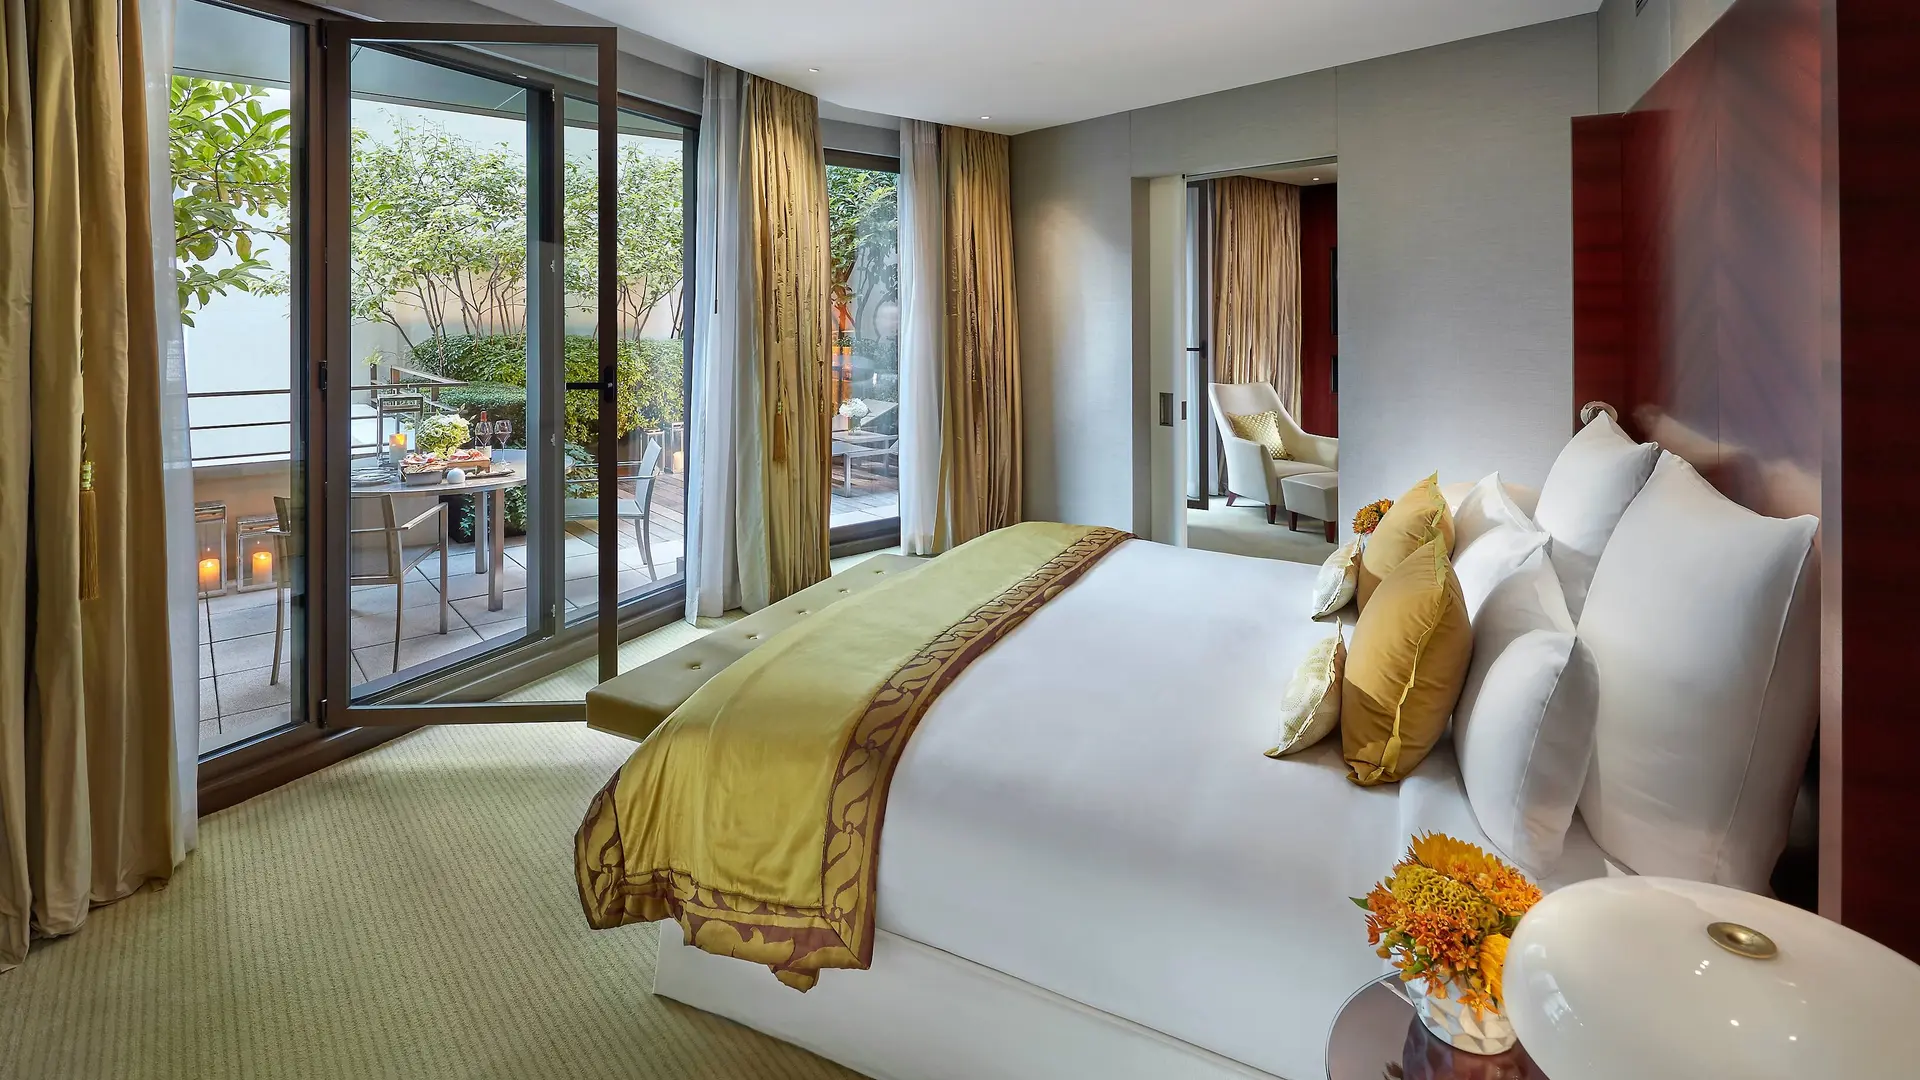 Hotel review Accommodation' - Mandarin Oriental, Paris - 2